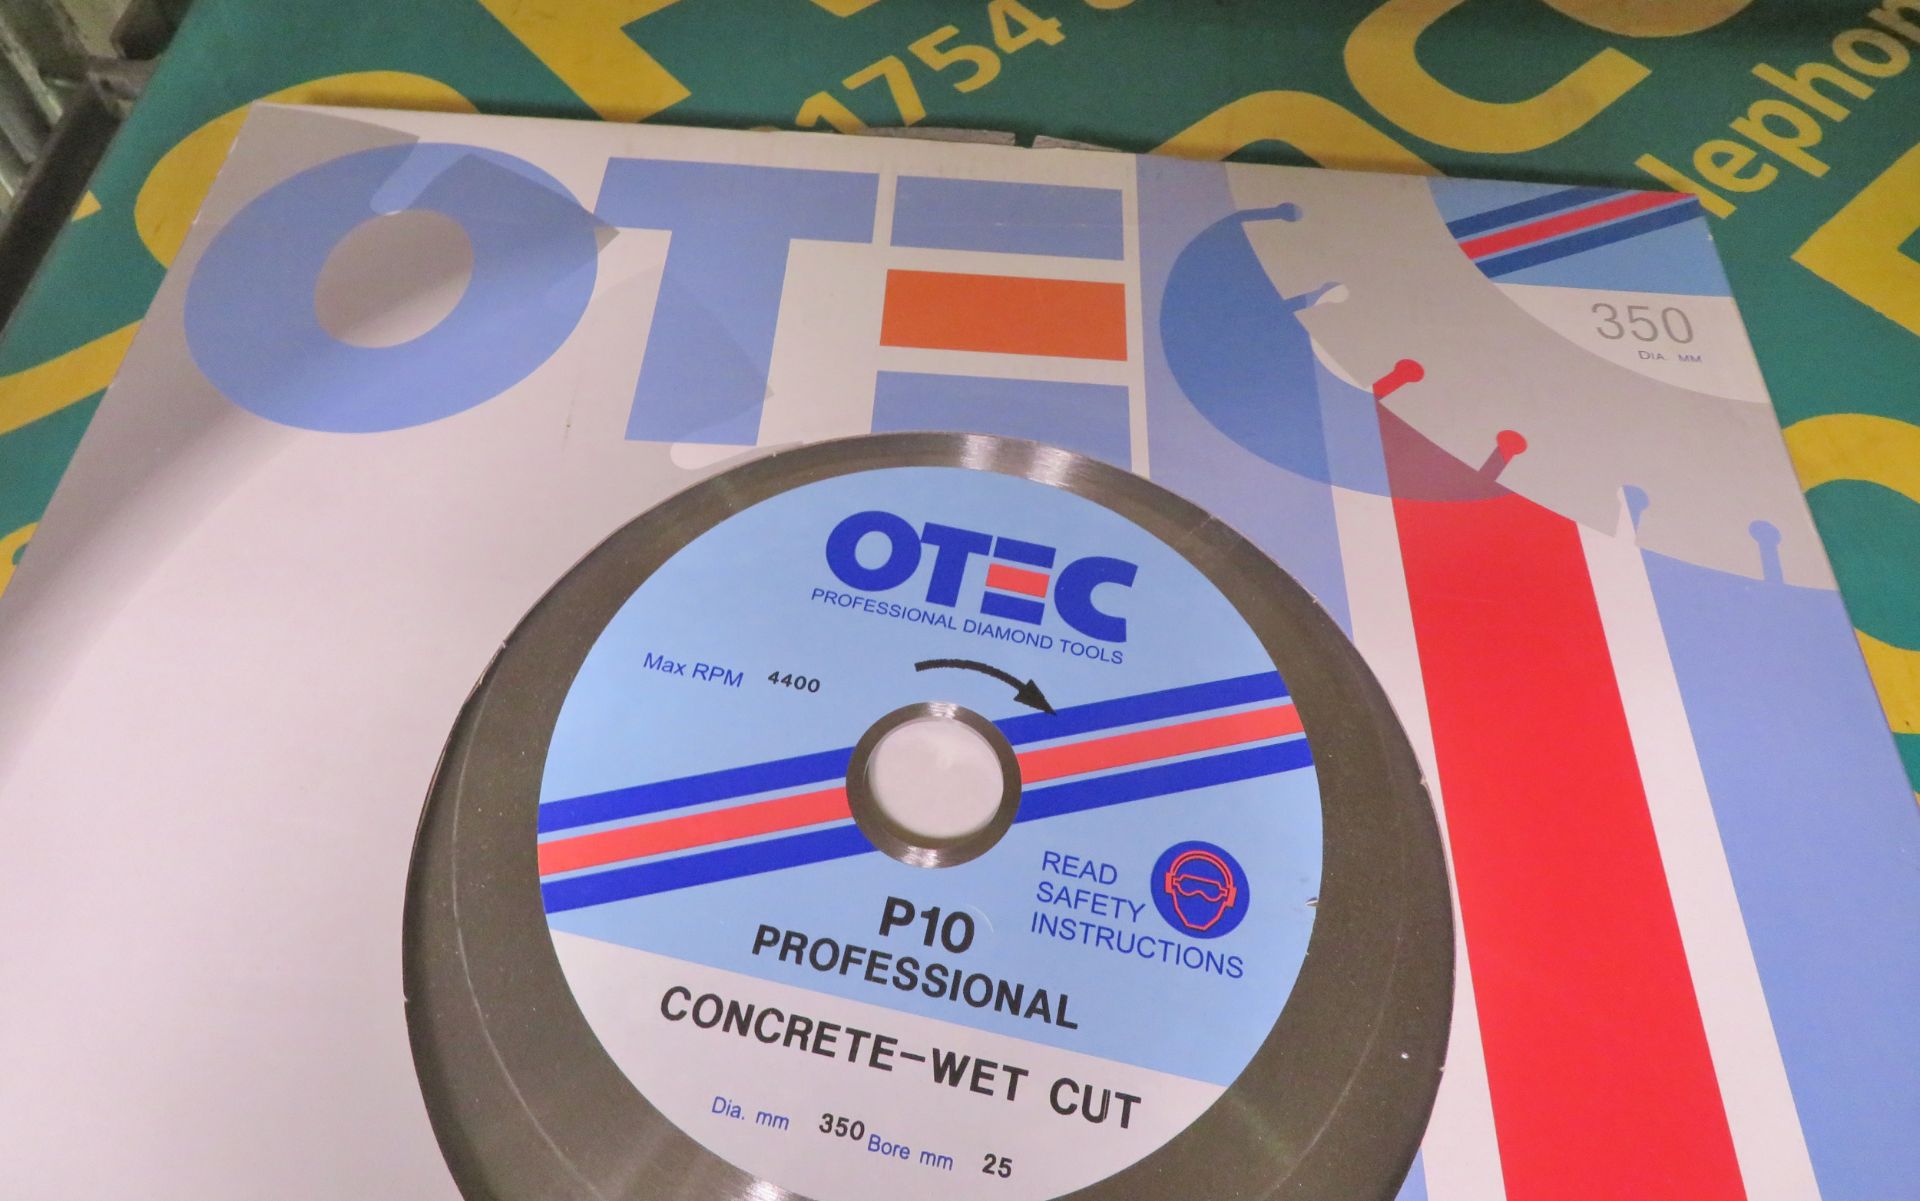 2x Otec P10 Professional Diamond Blades Concrete Wet Cut - Image 2 of 3